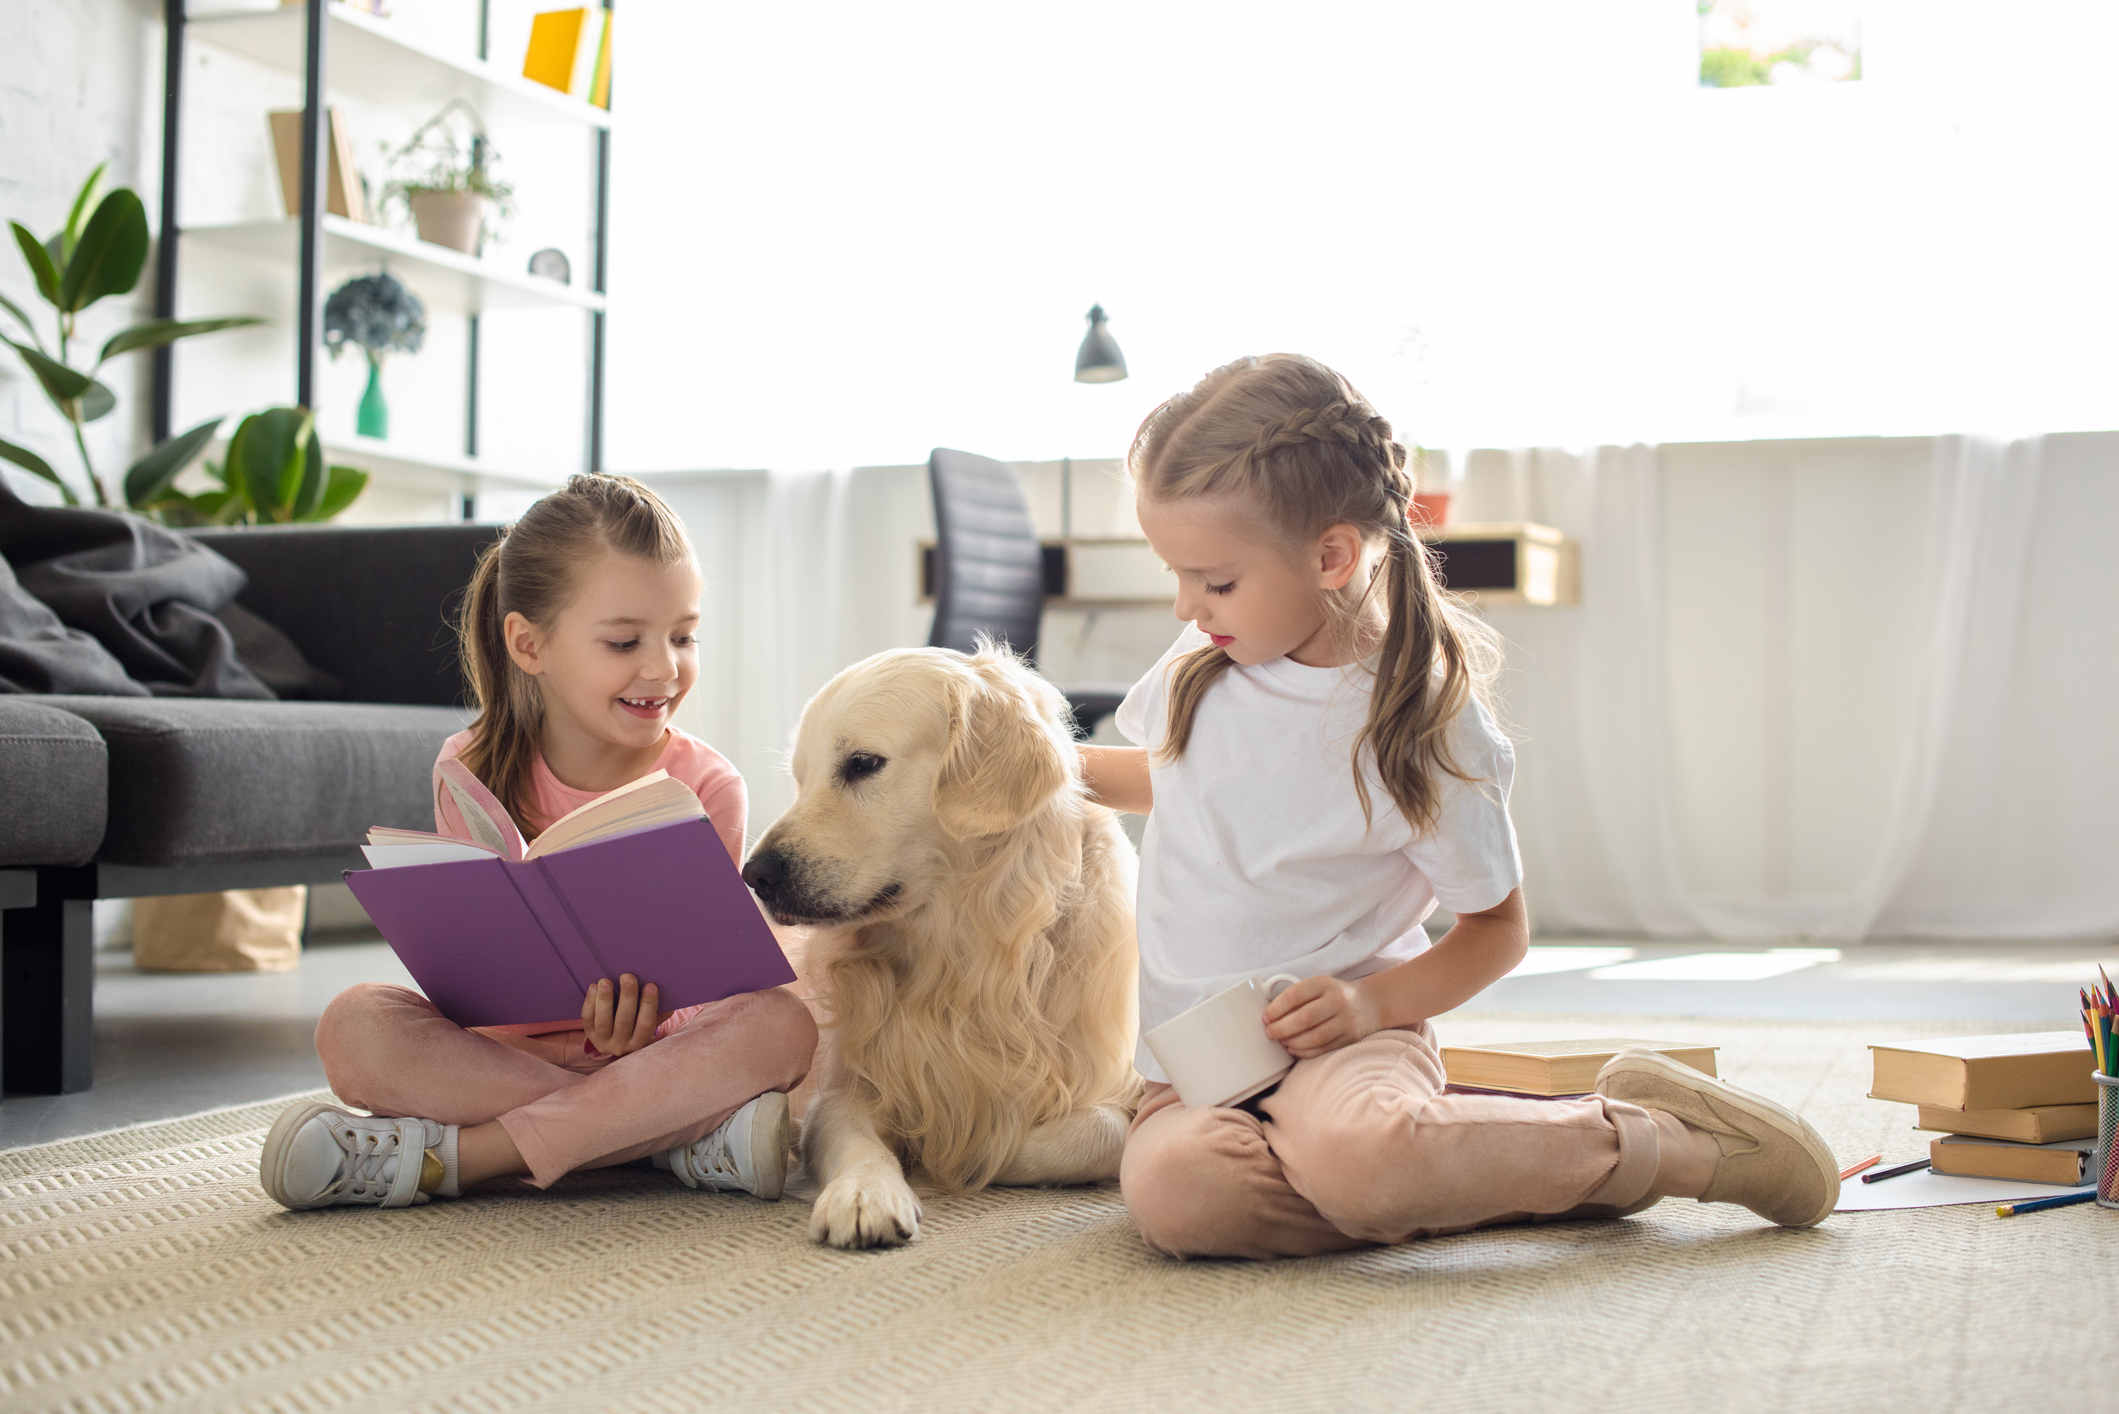 Pet reading 5. Малыш с книжкой и собака рядом фото. Pet reading. Pets help children learn to communicate.